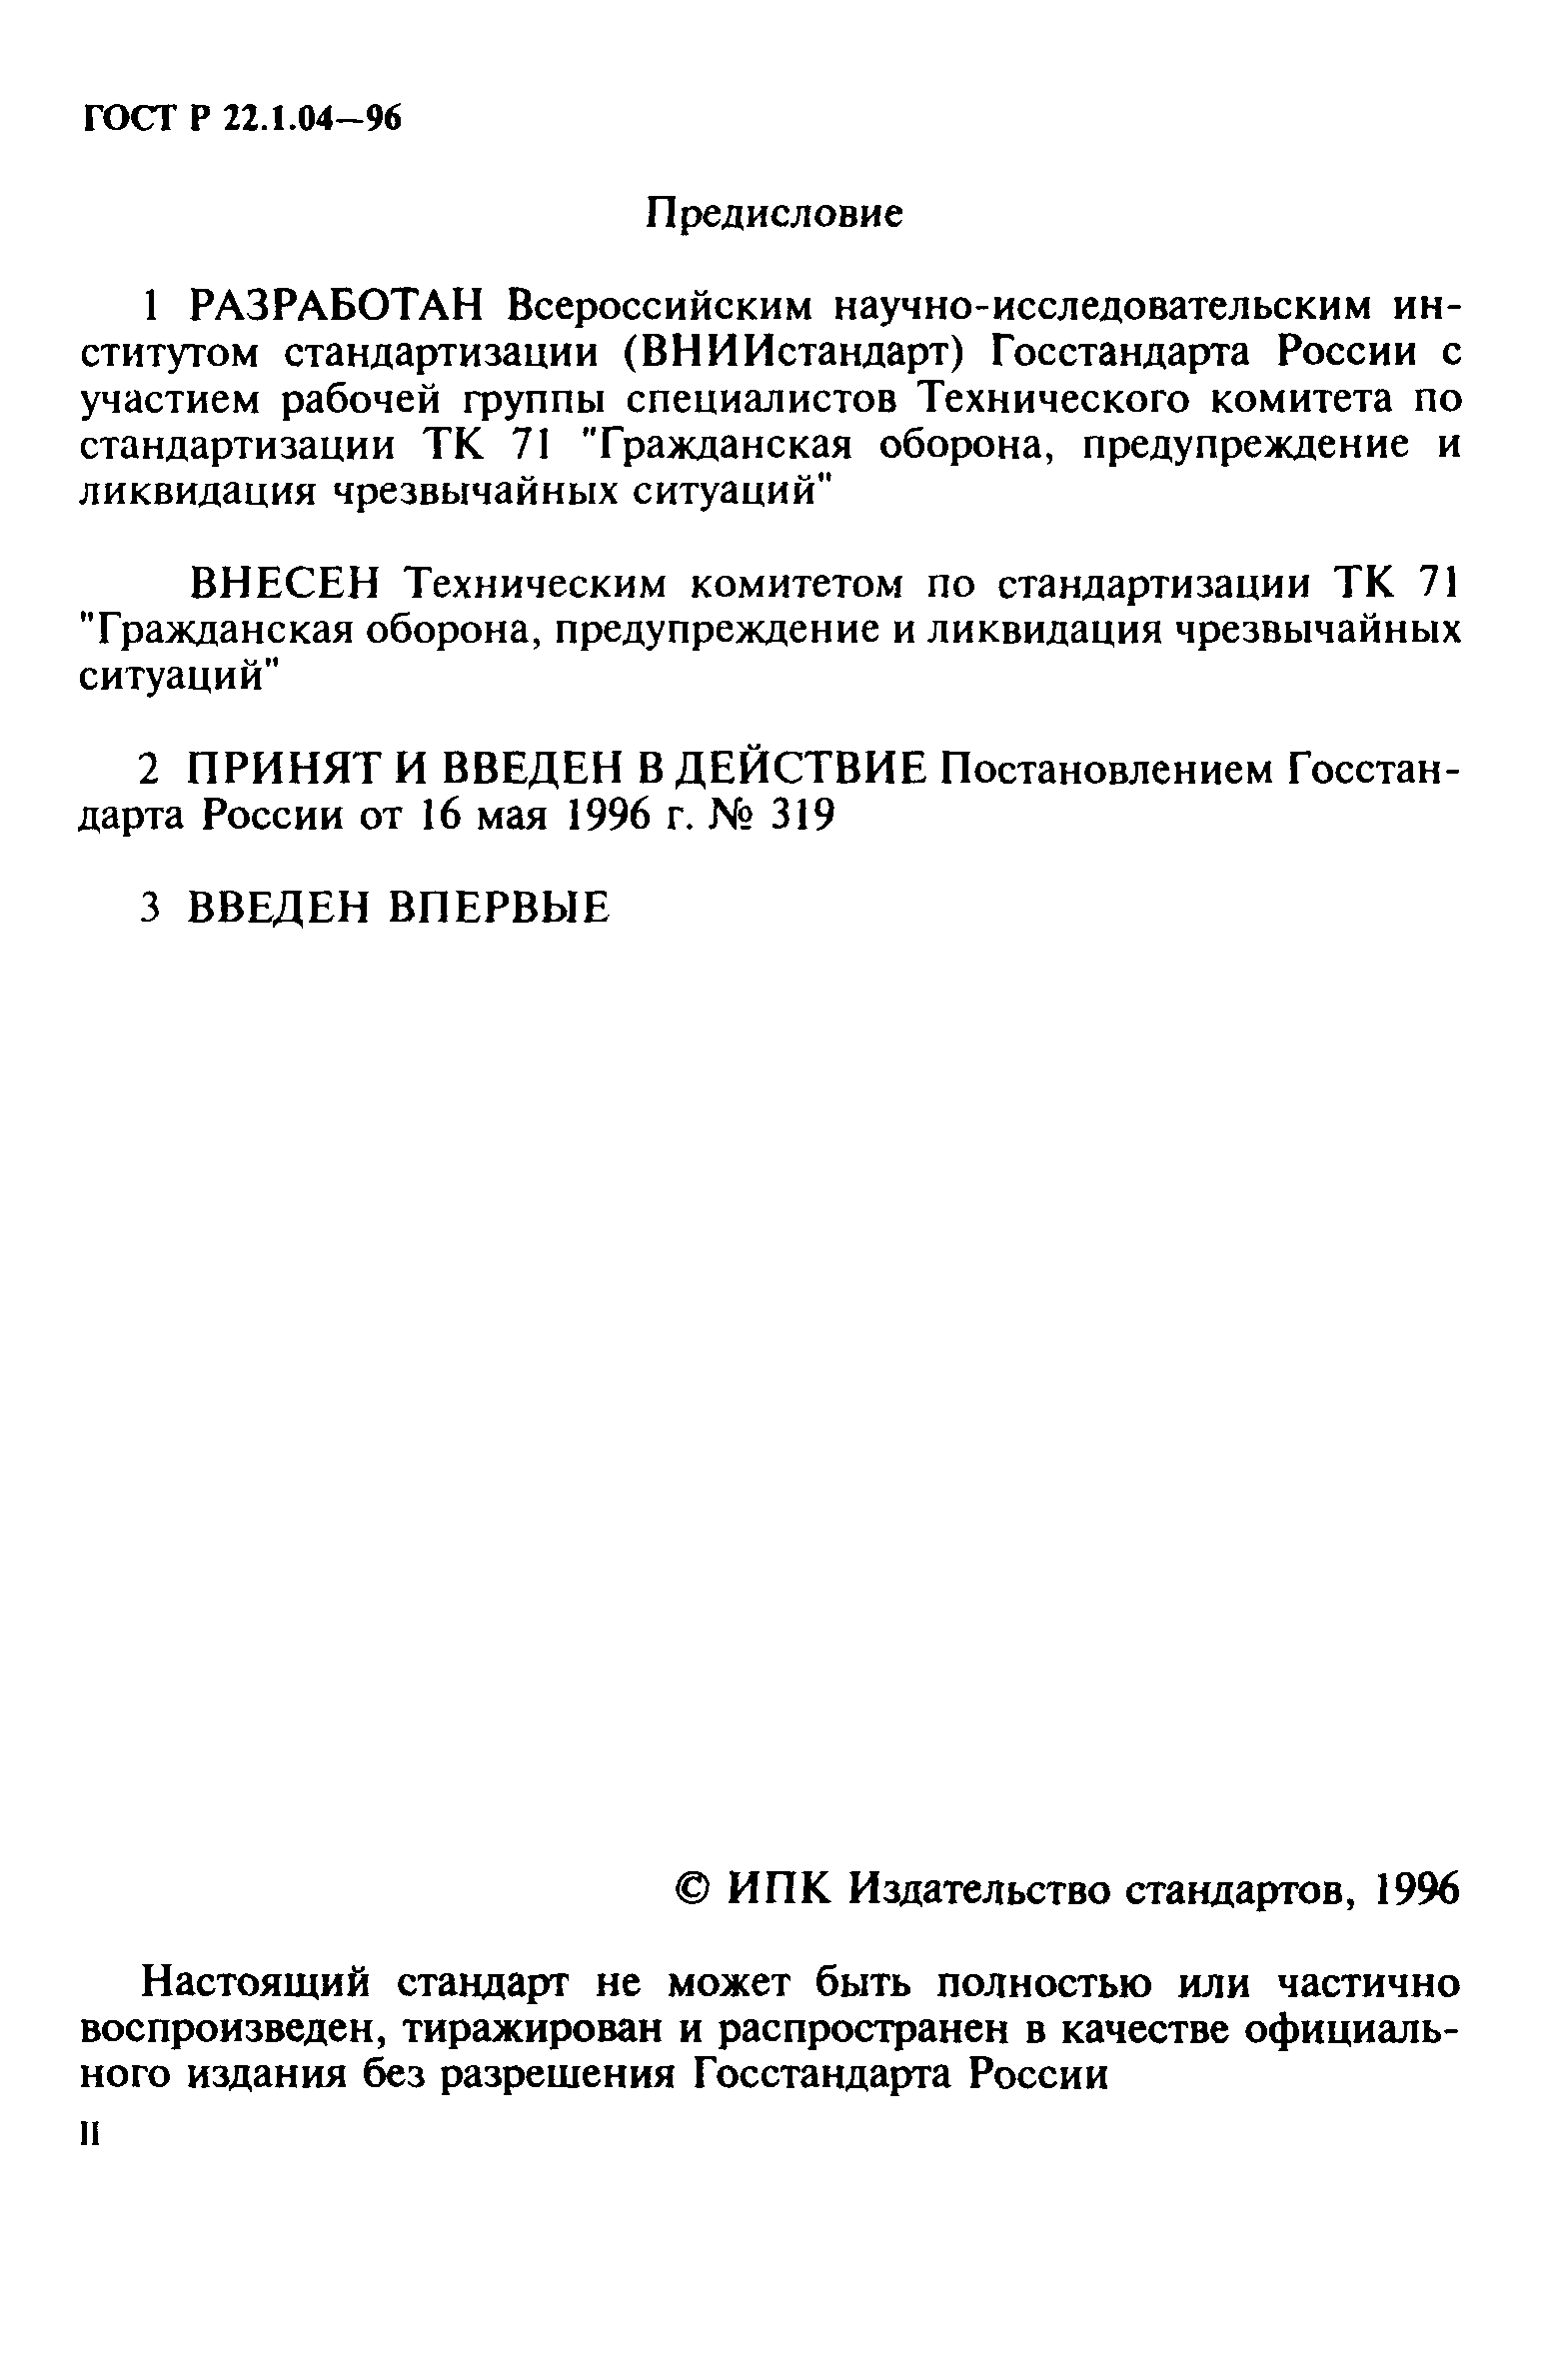 ГОСТ Р 22.1.04-96